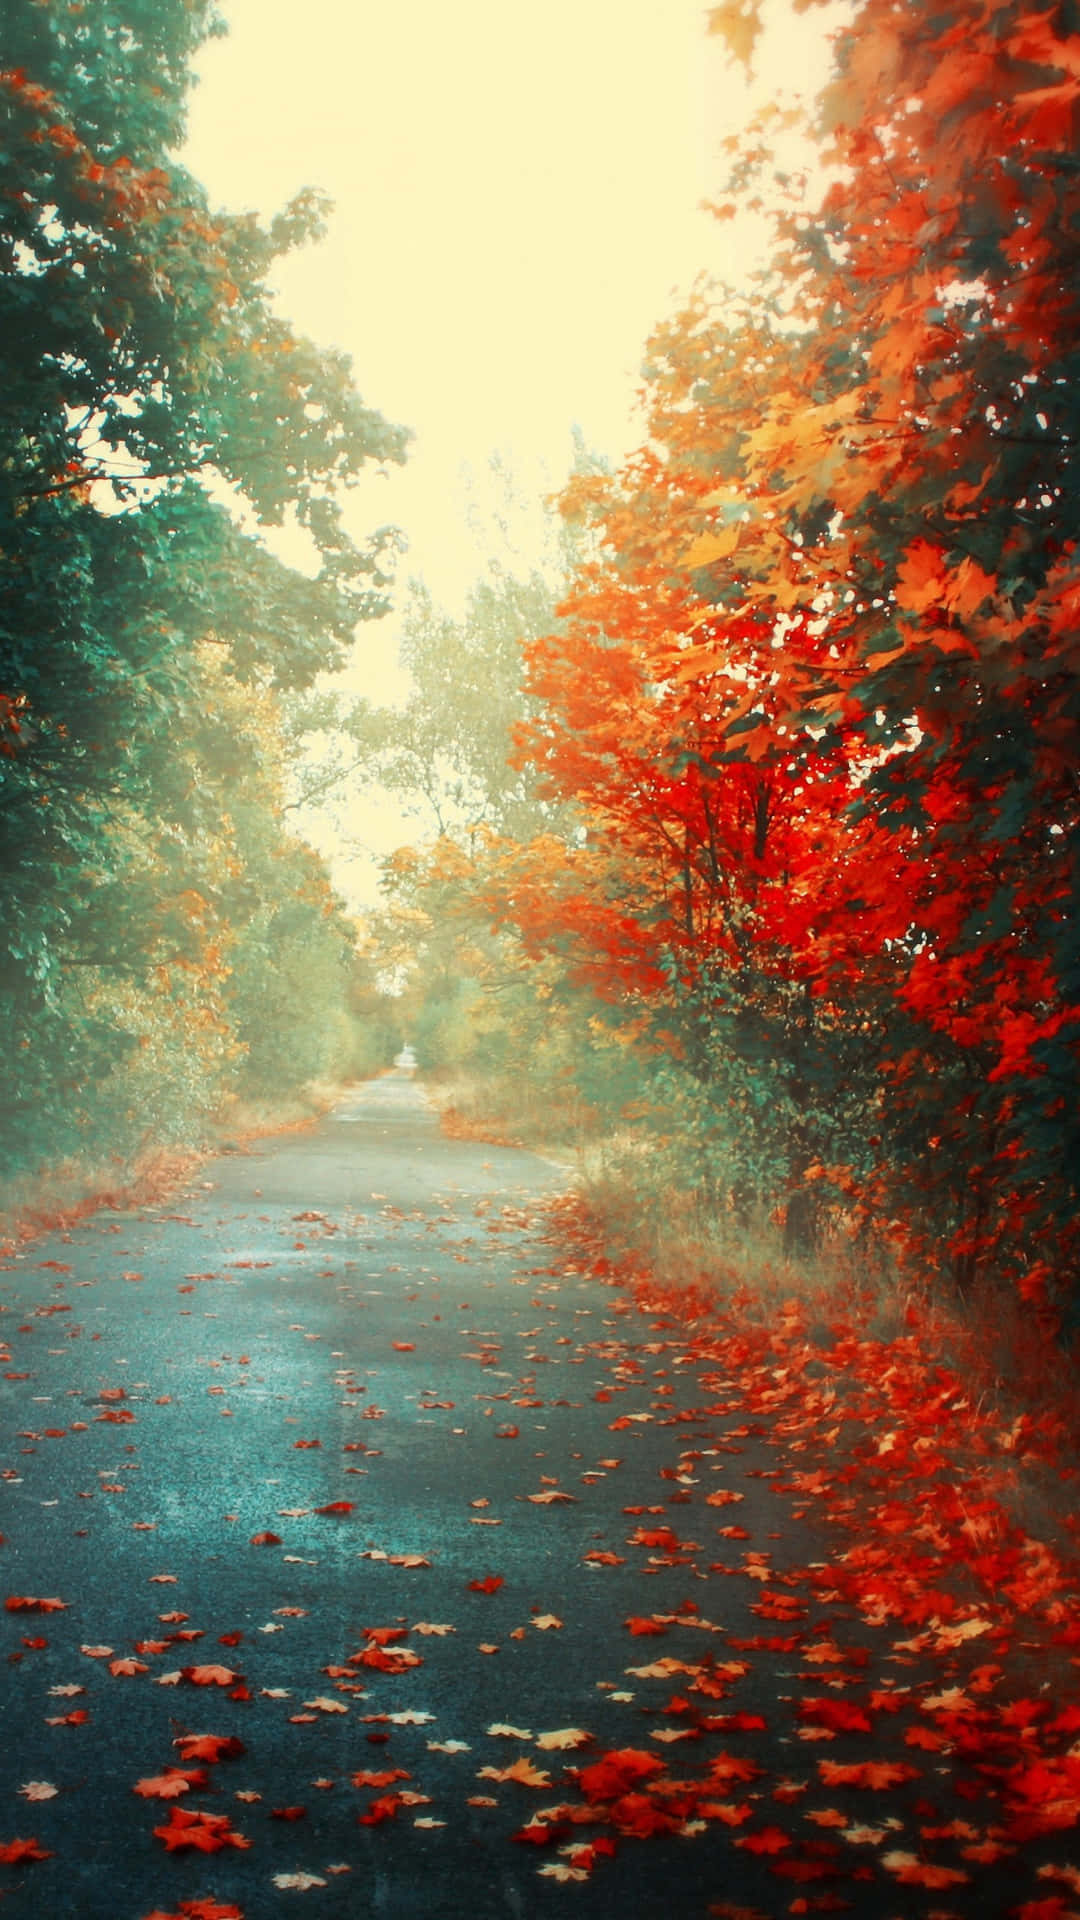 Autumn Pathway Scenery Wallpaper